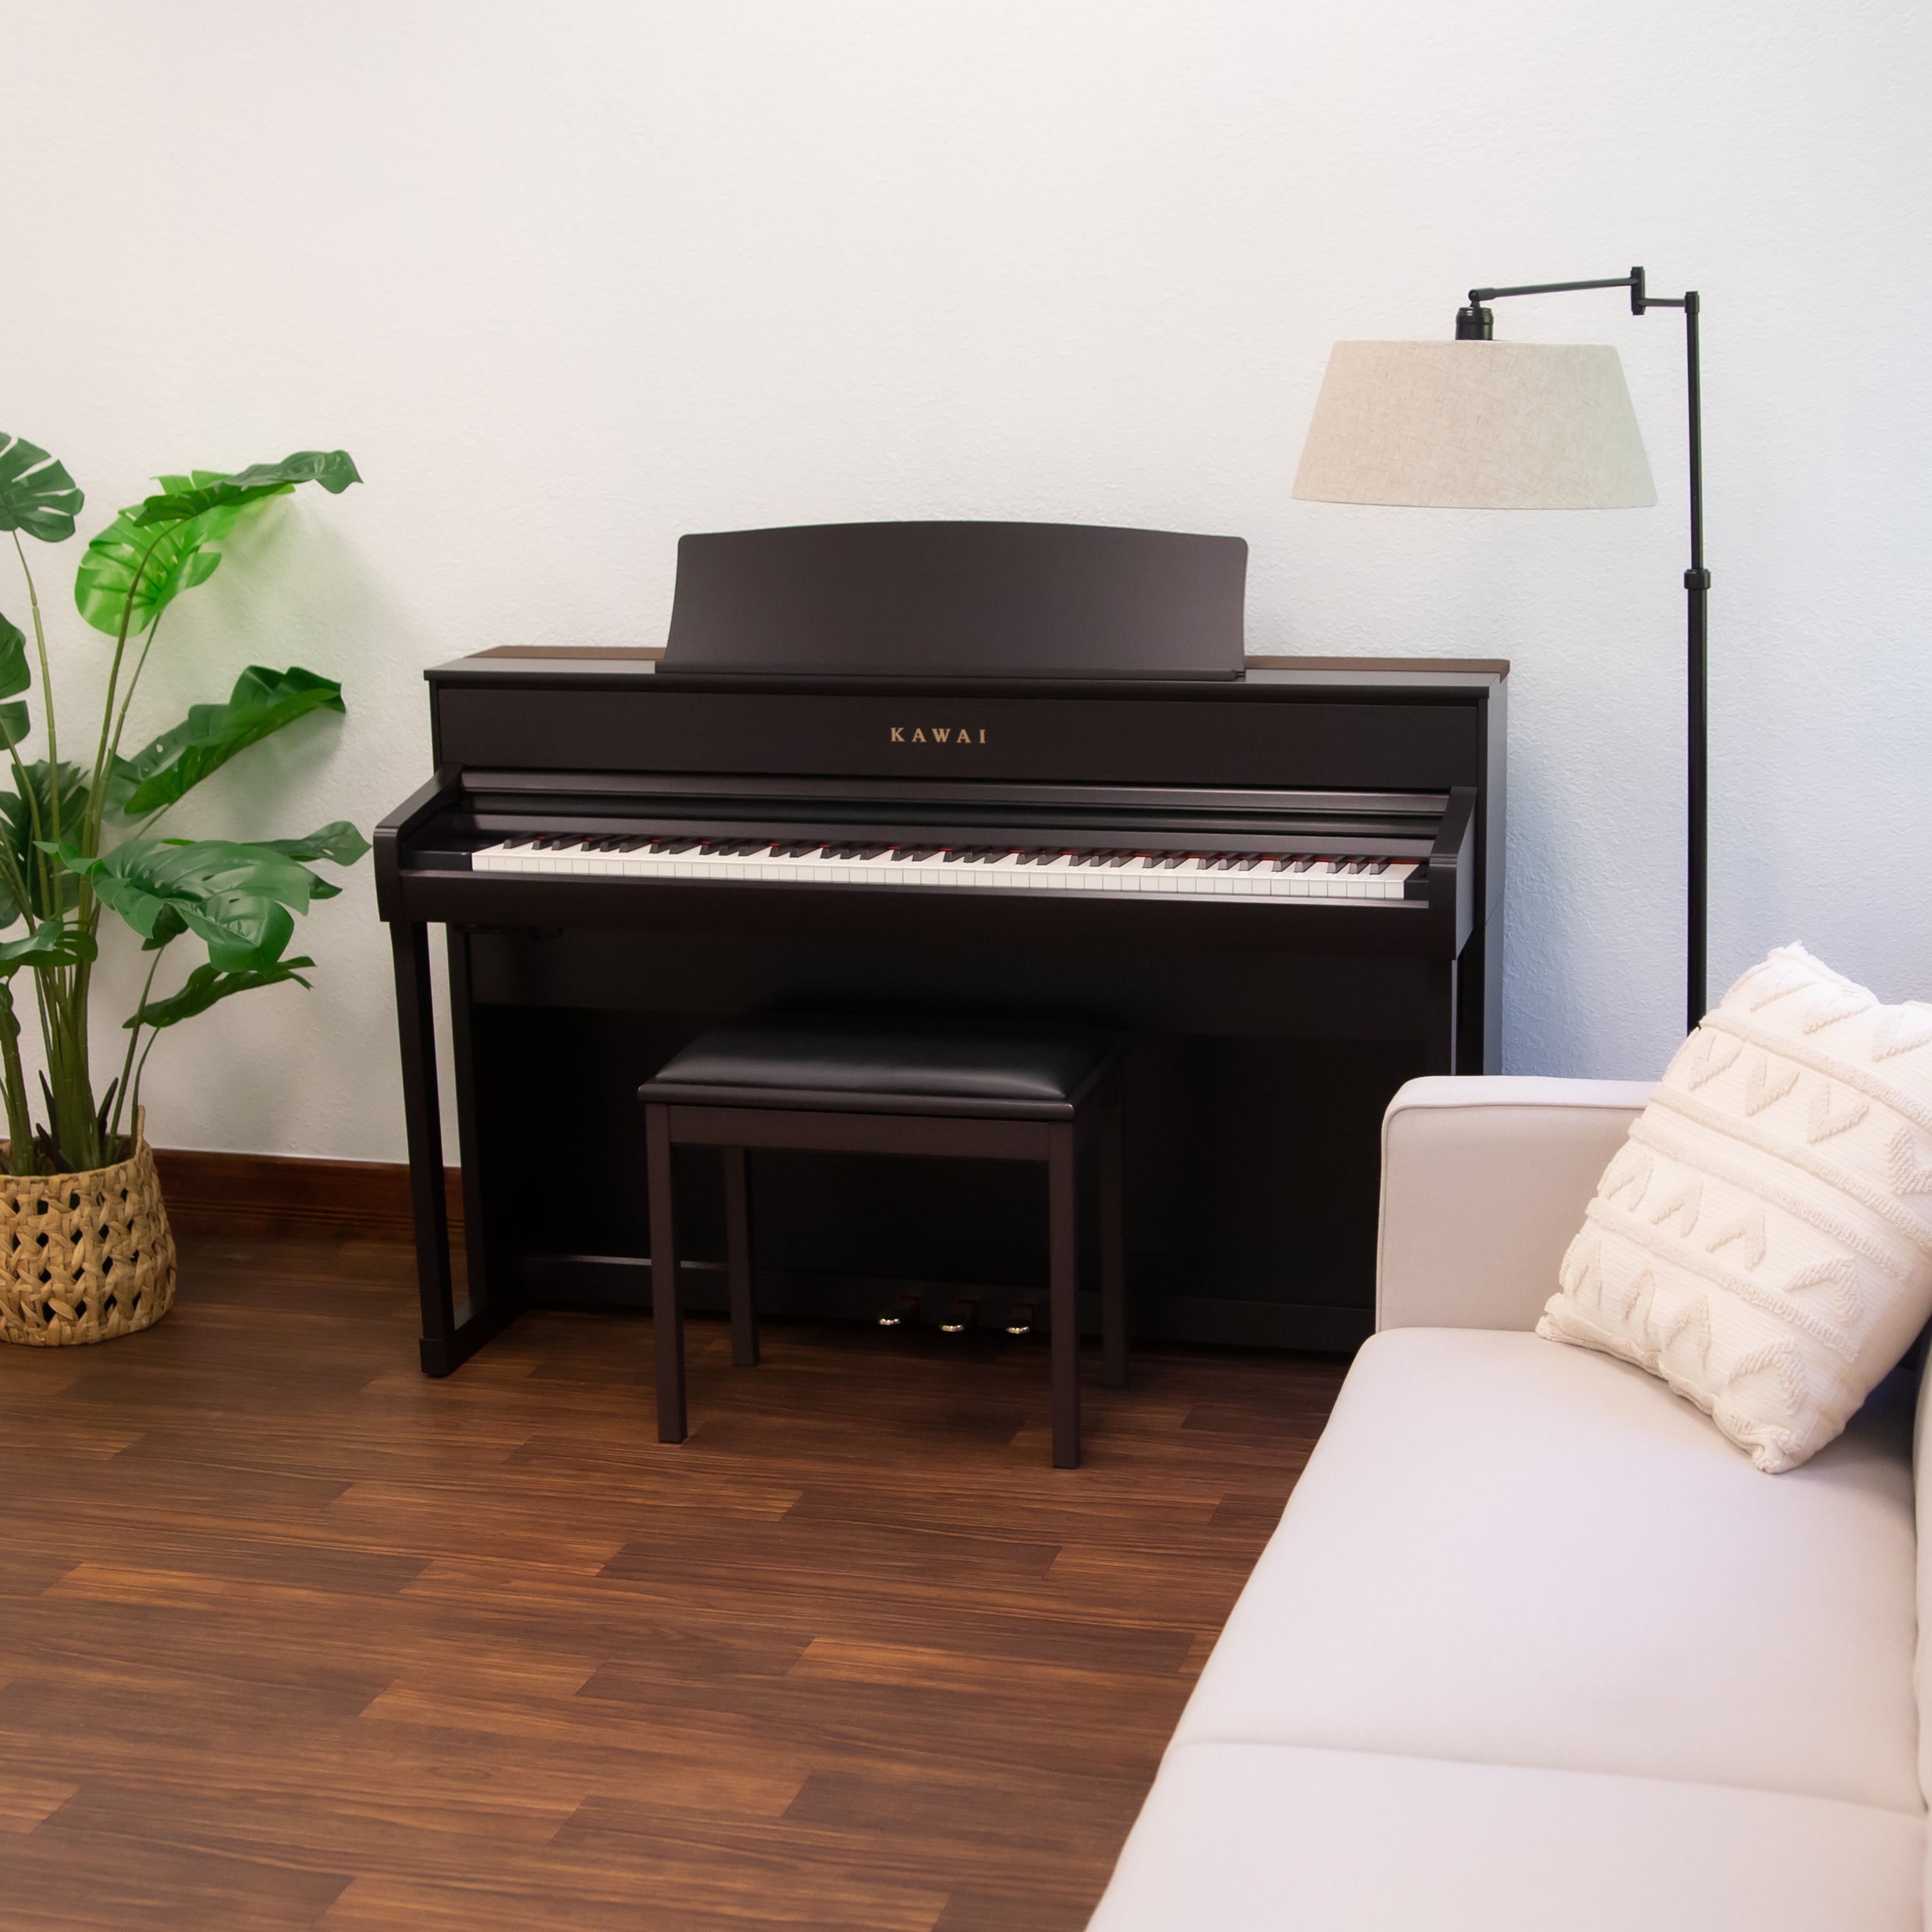 Kawai CA701 Digital Piano - Rosewood - left facing in a stylish living room